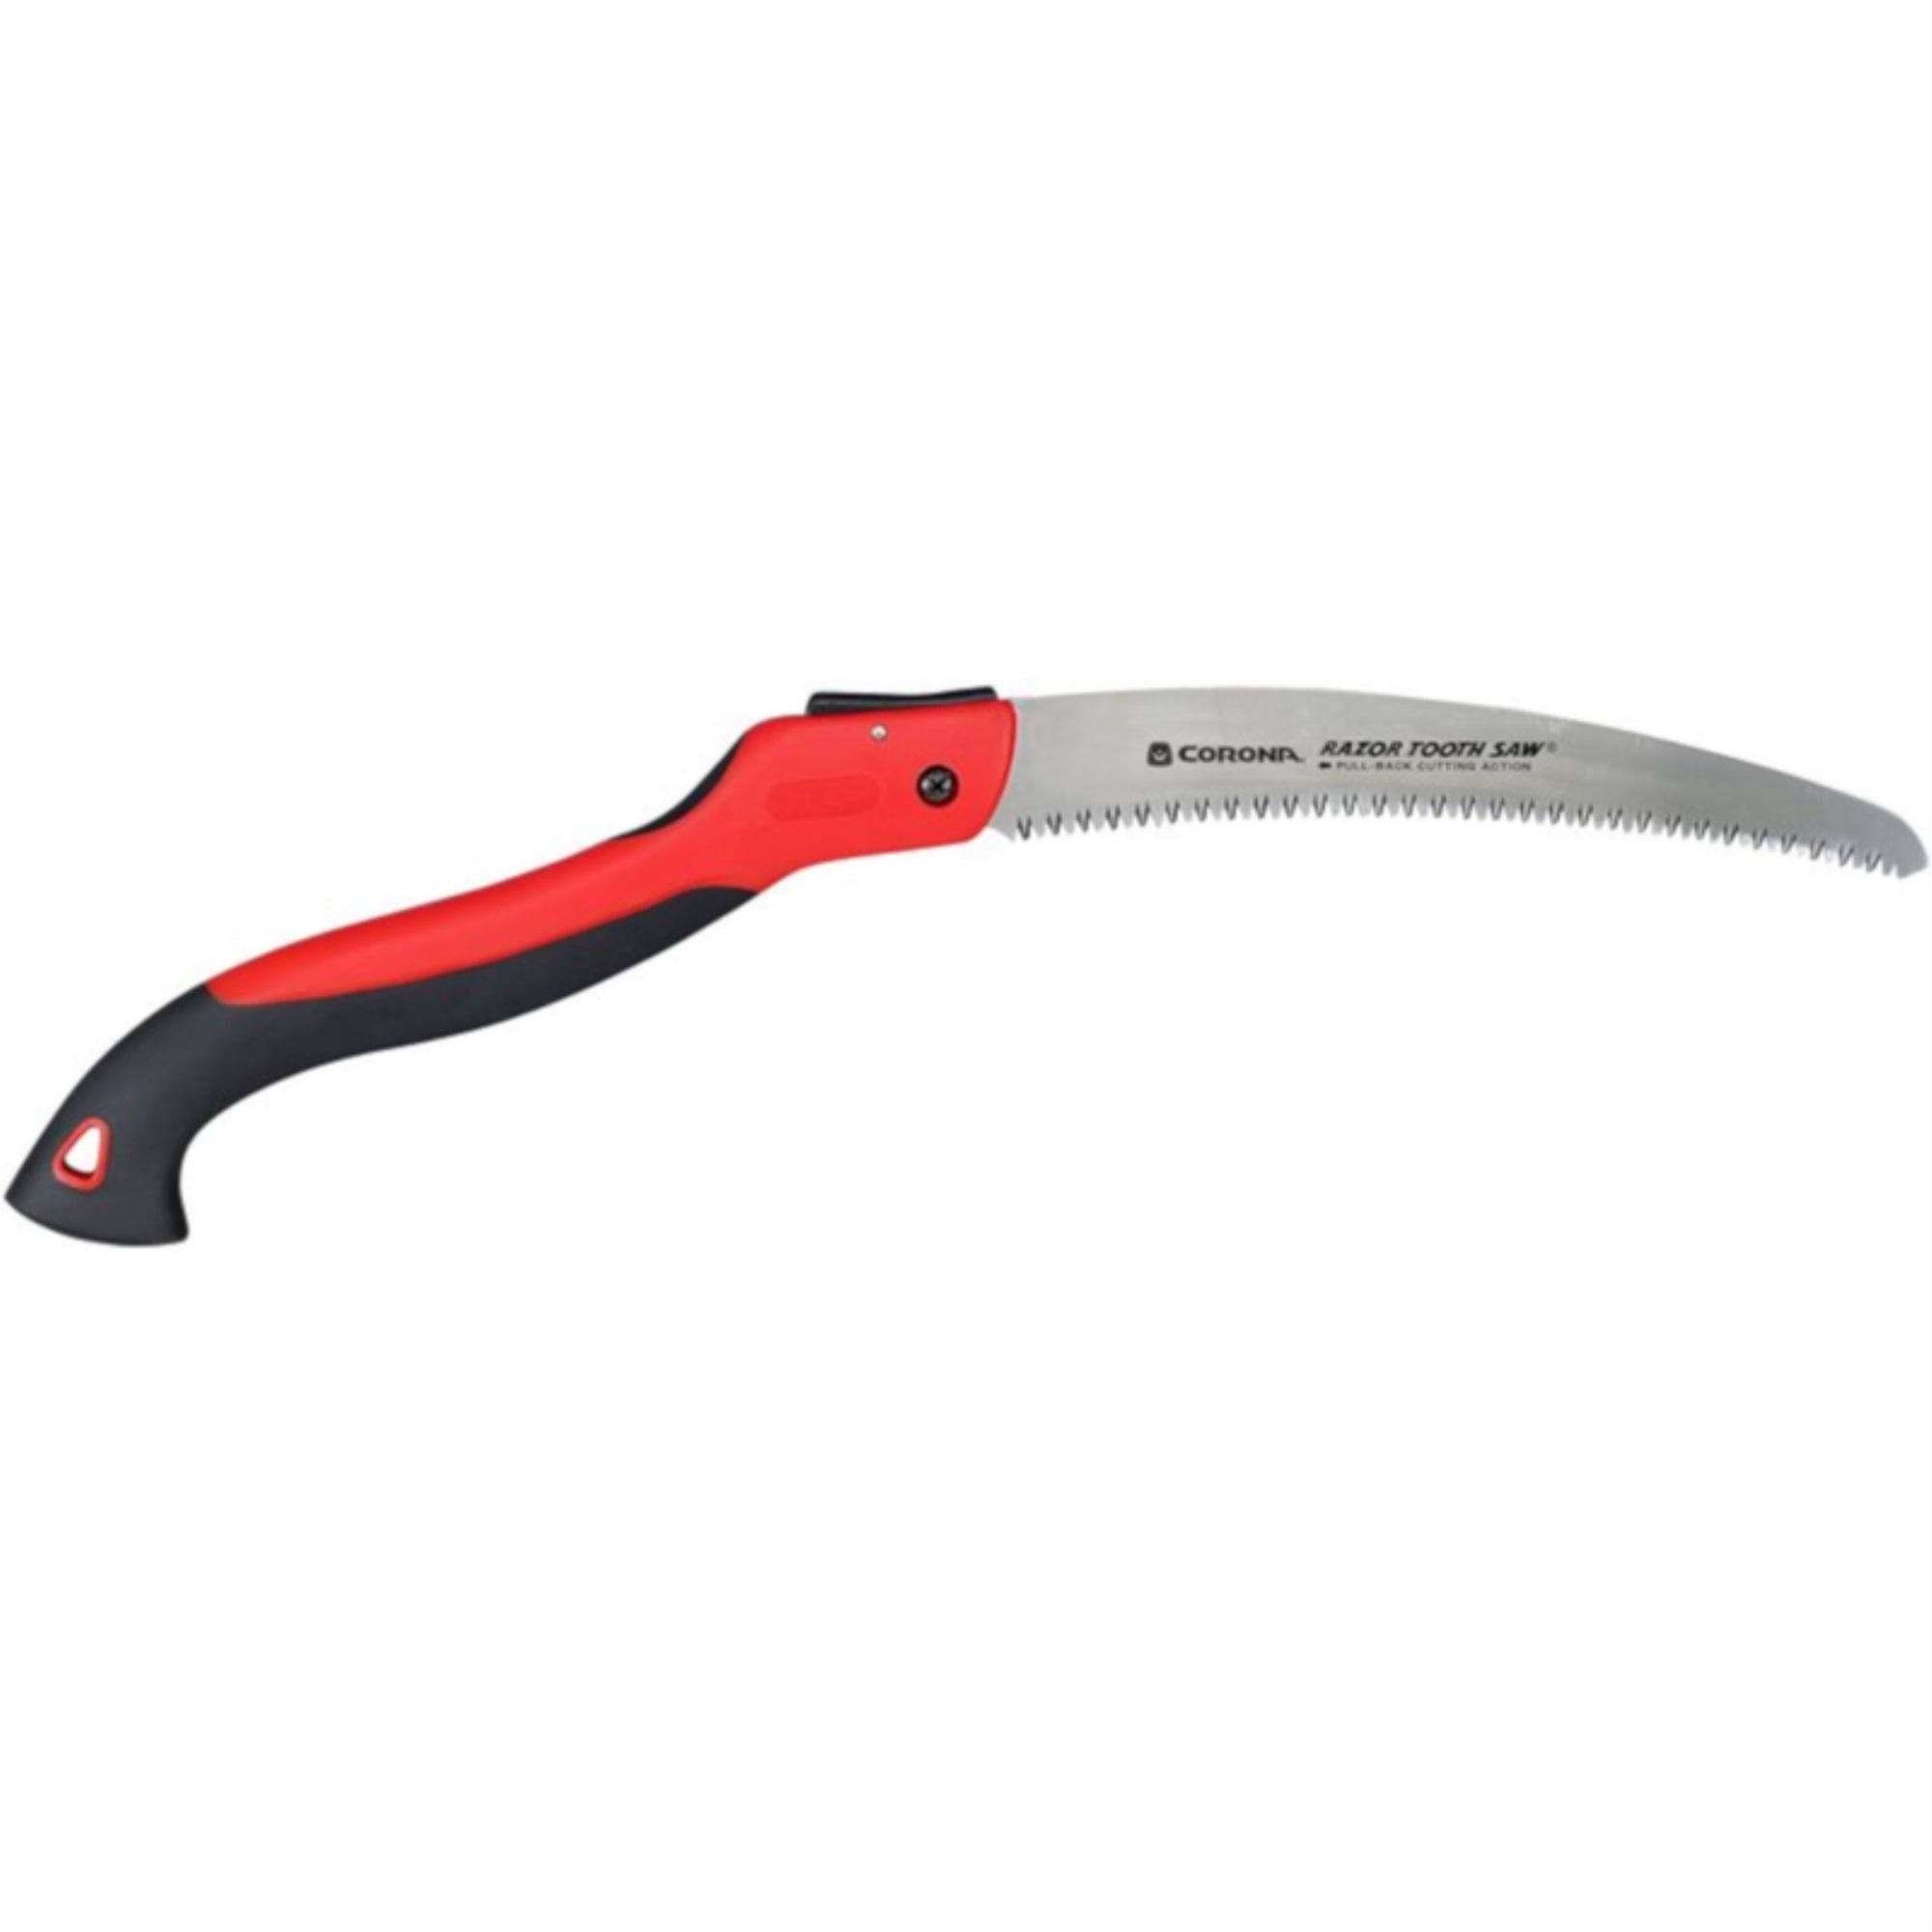 Corona Razortooth Folding Pruning Saw - 10" Curved Blade